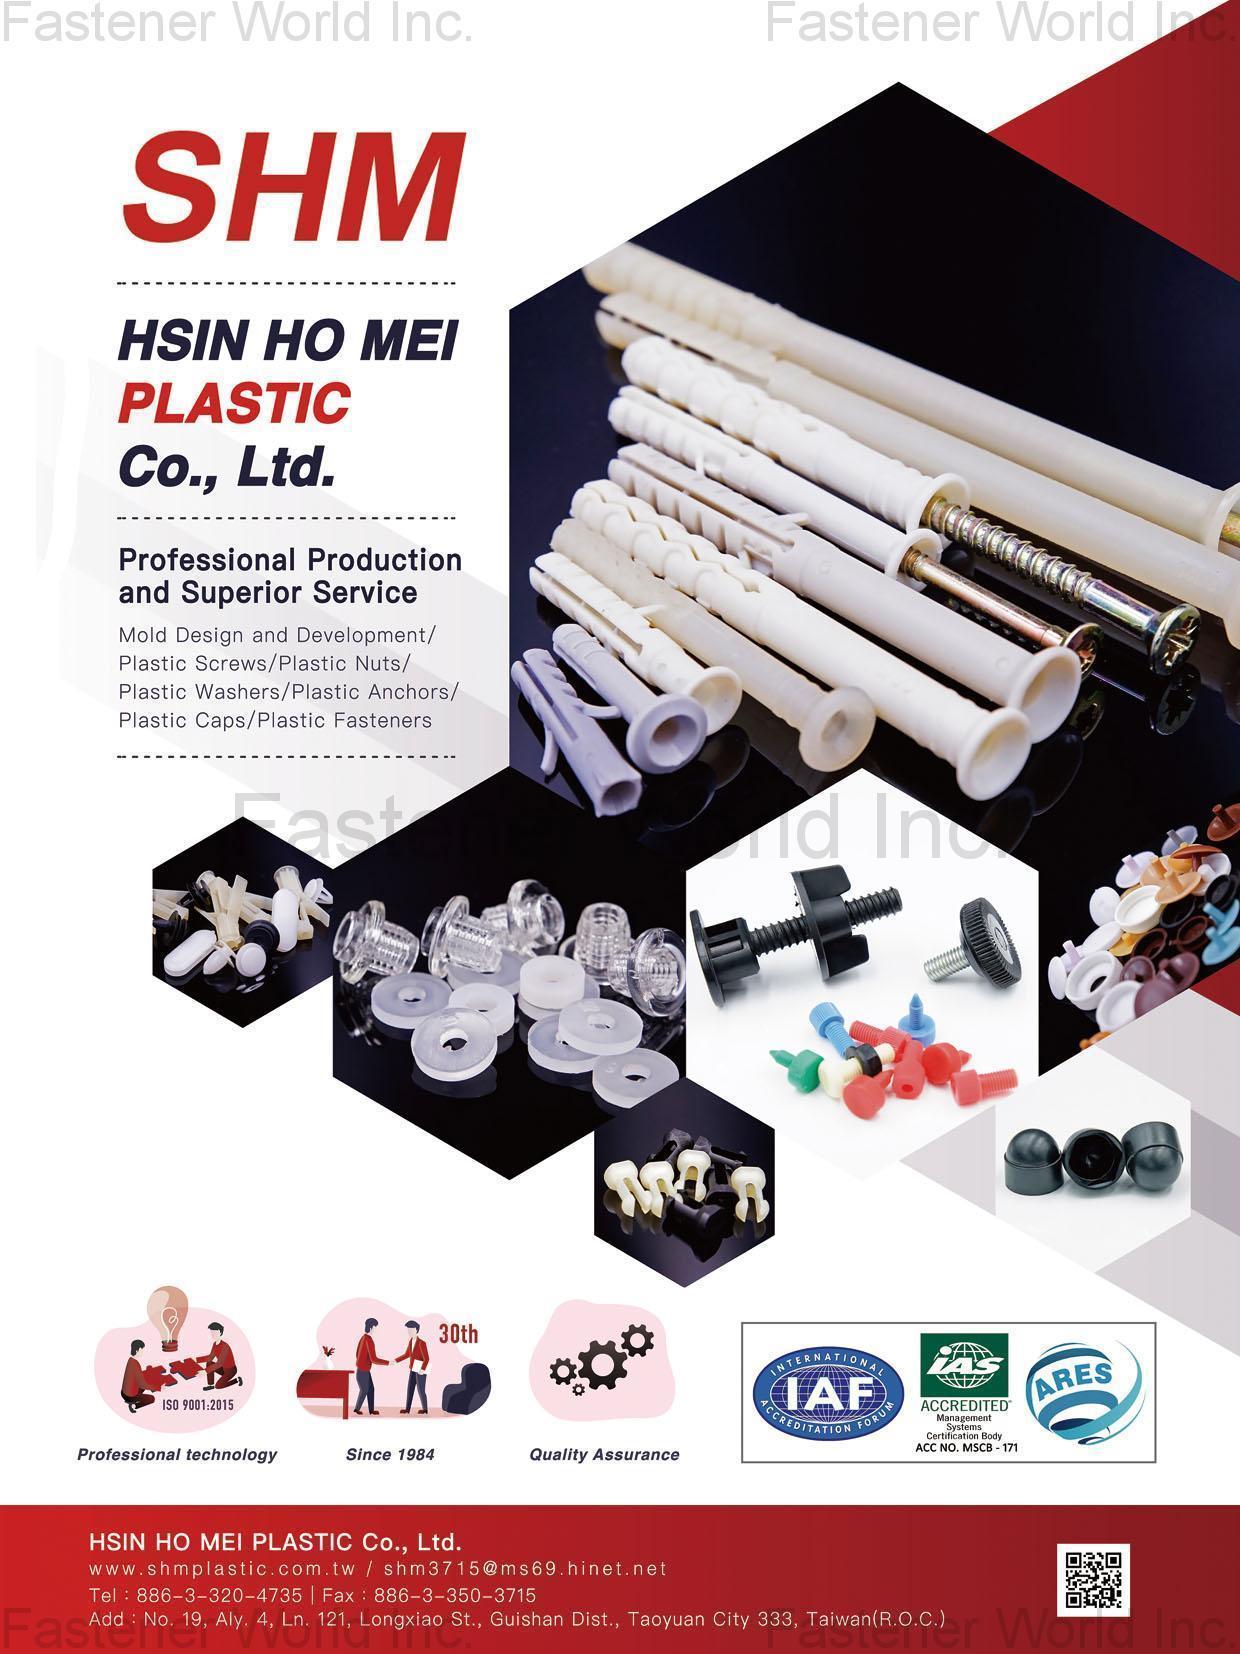 HSIN HO MEI PLASTIC CO., LTD. , Mold Design and Development, Plastic Screws, Plastic Nuts, Plastic Washers, Plastic Anchors, Plastic Caps, Plastic Fasteners